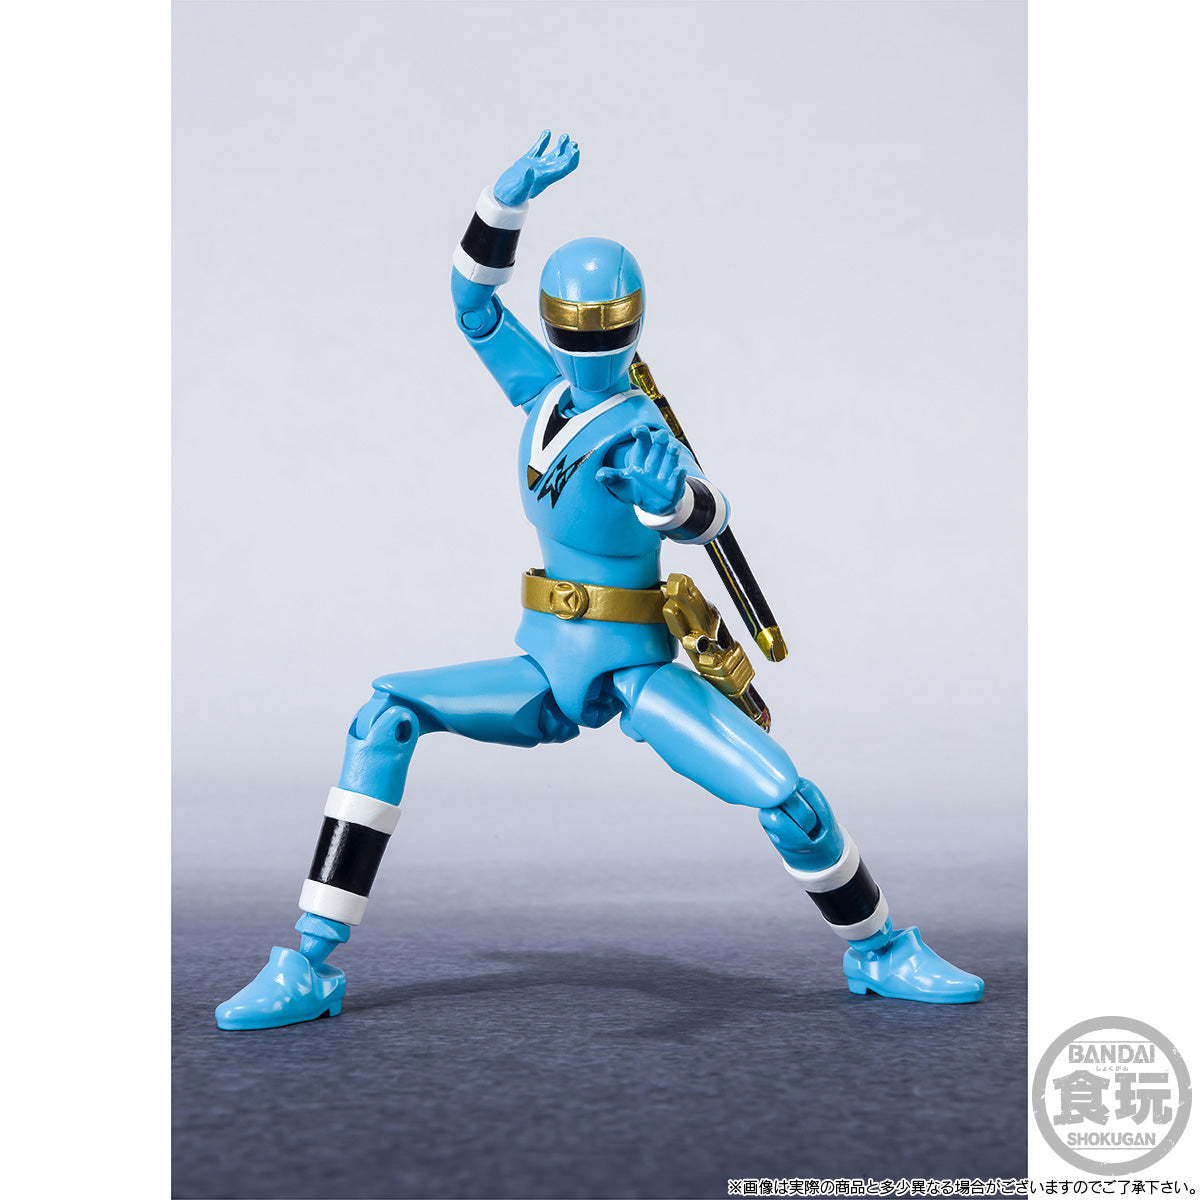 [PRE-ORDER] Shodo Super Ninja Sentai Kakuranger Figure Set of 5